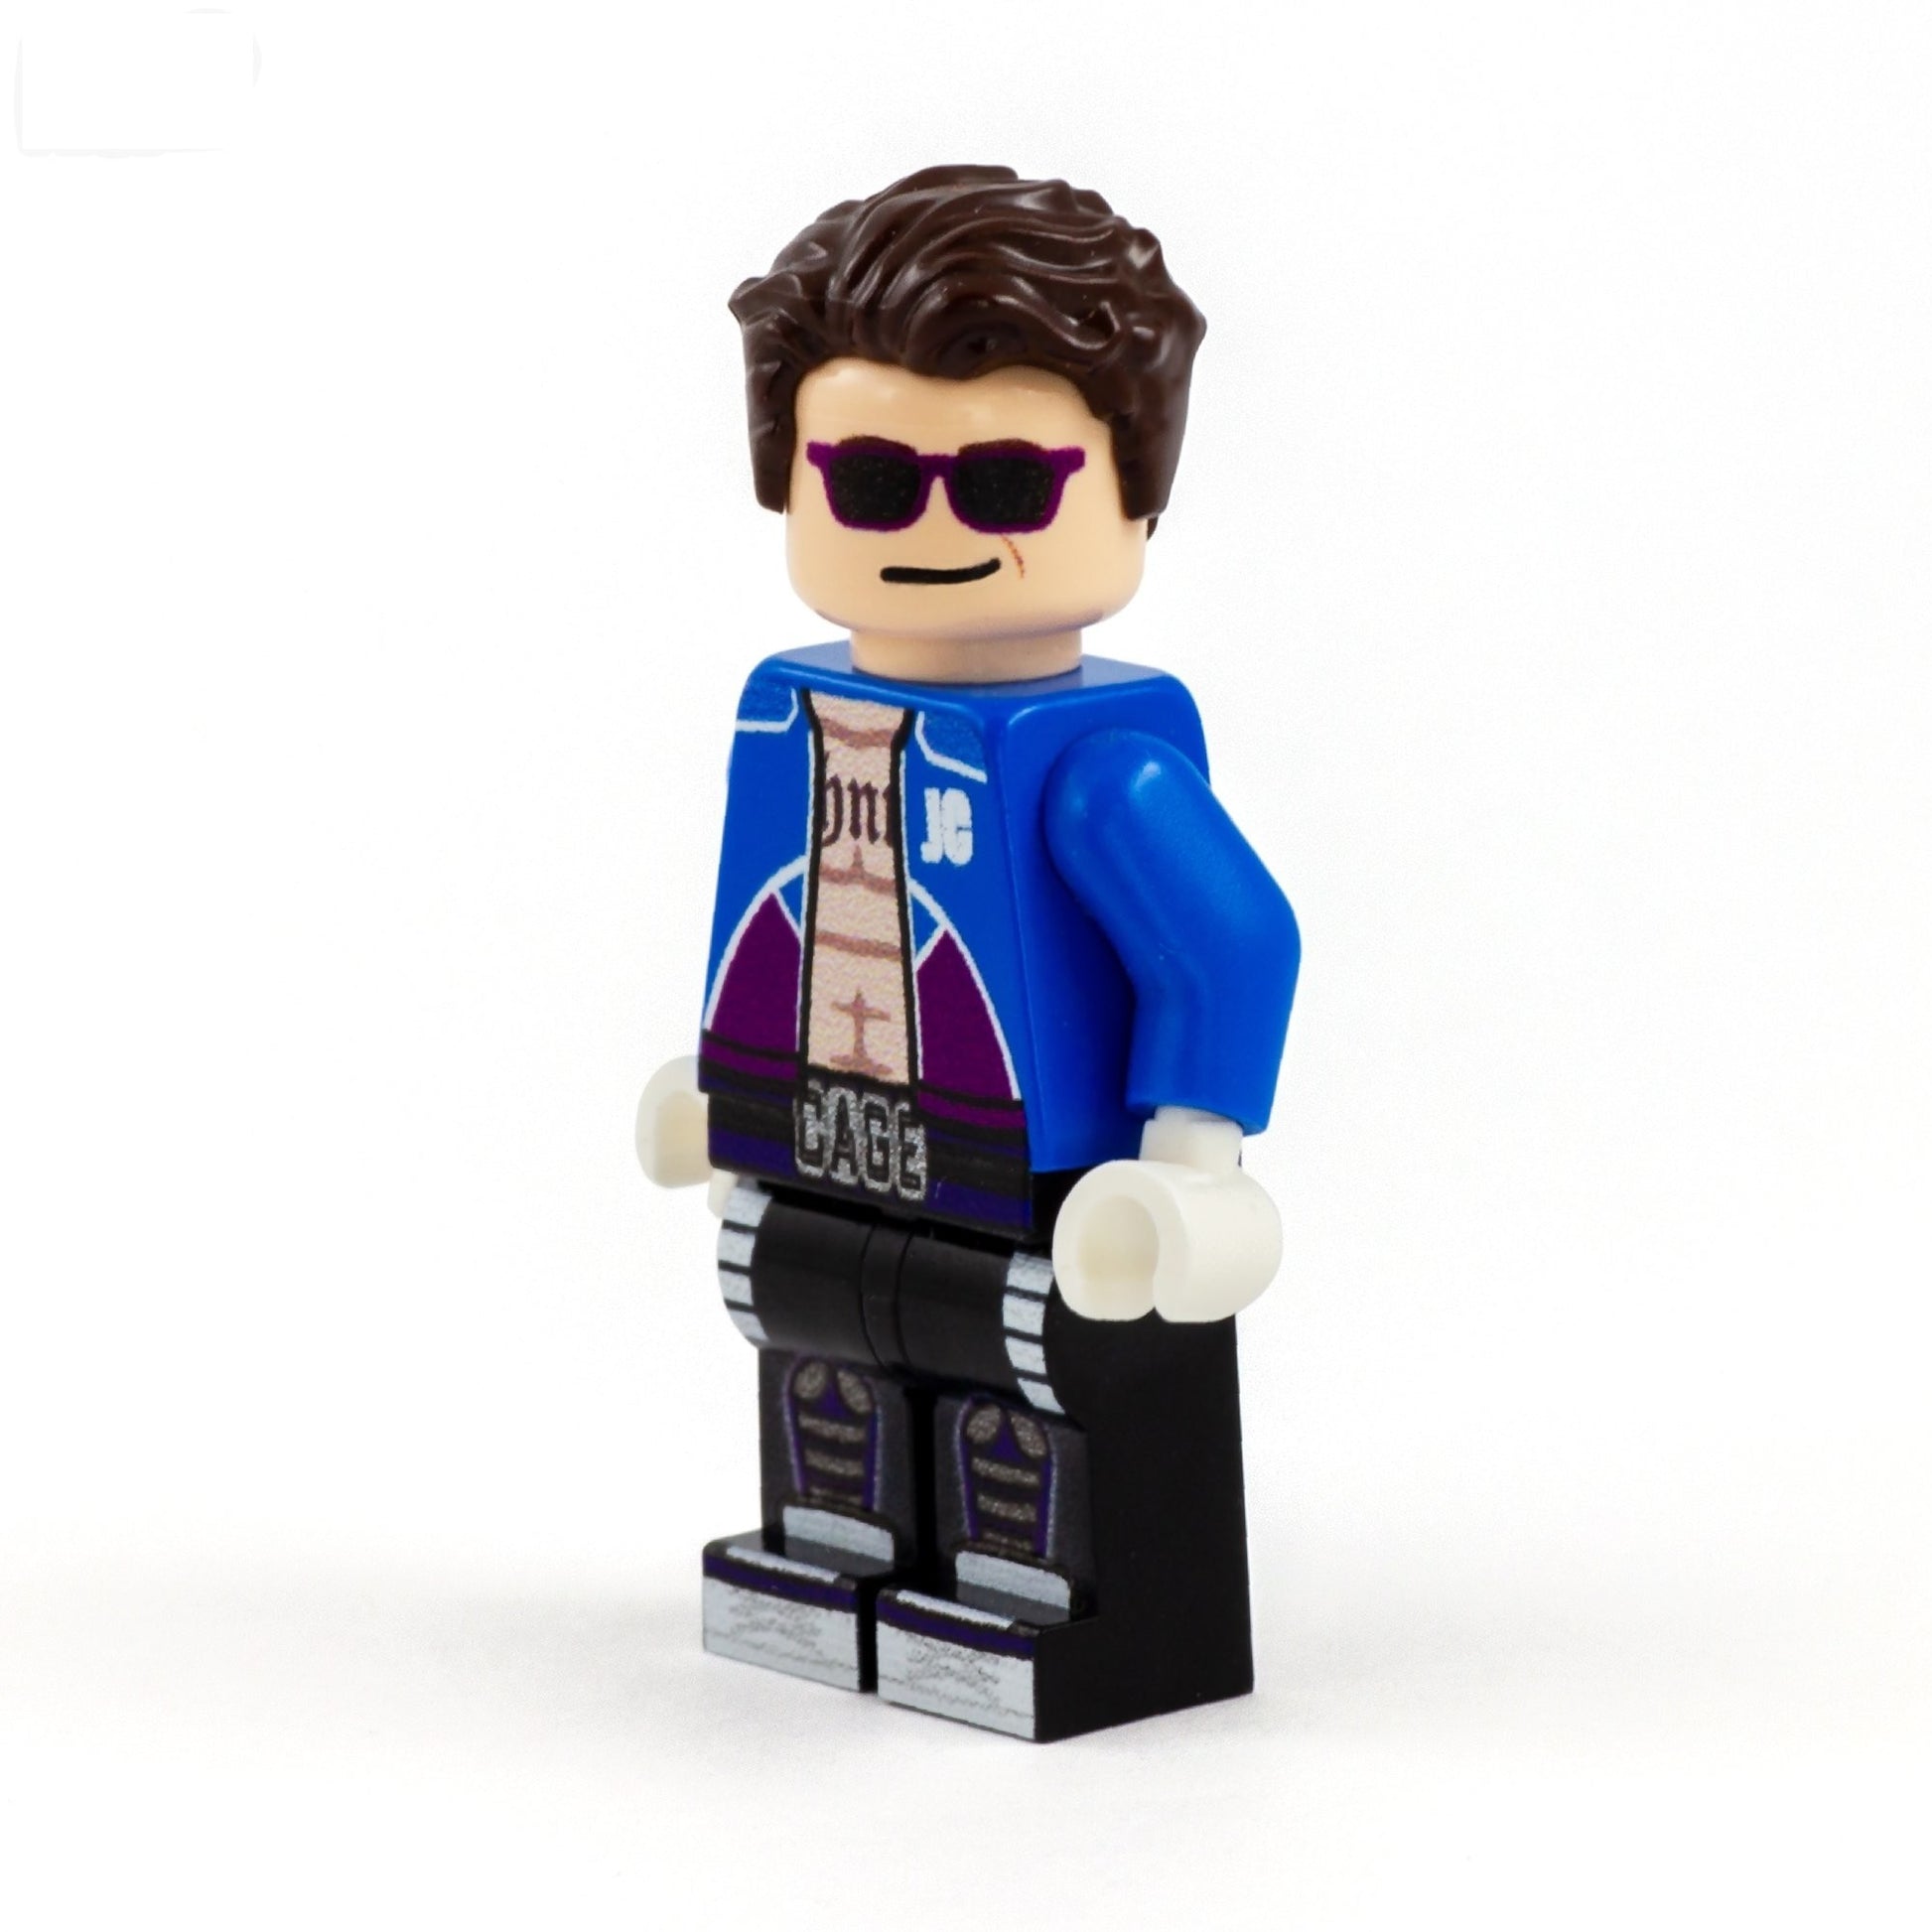 Johnny Cage - Custom LEGO Minifigure